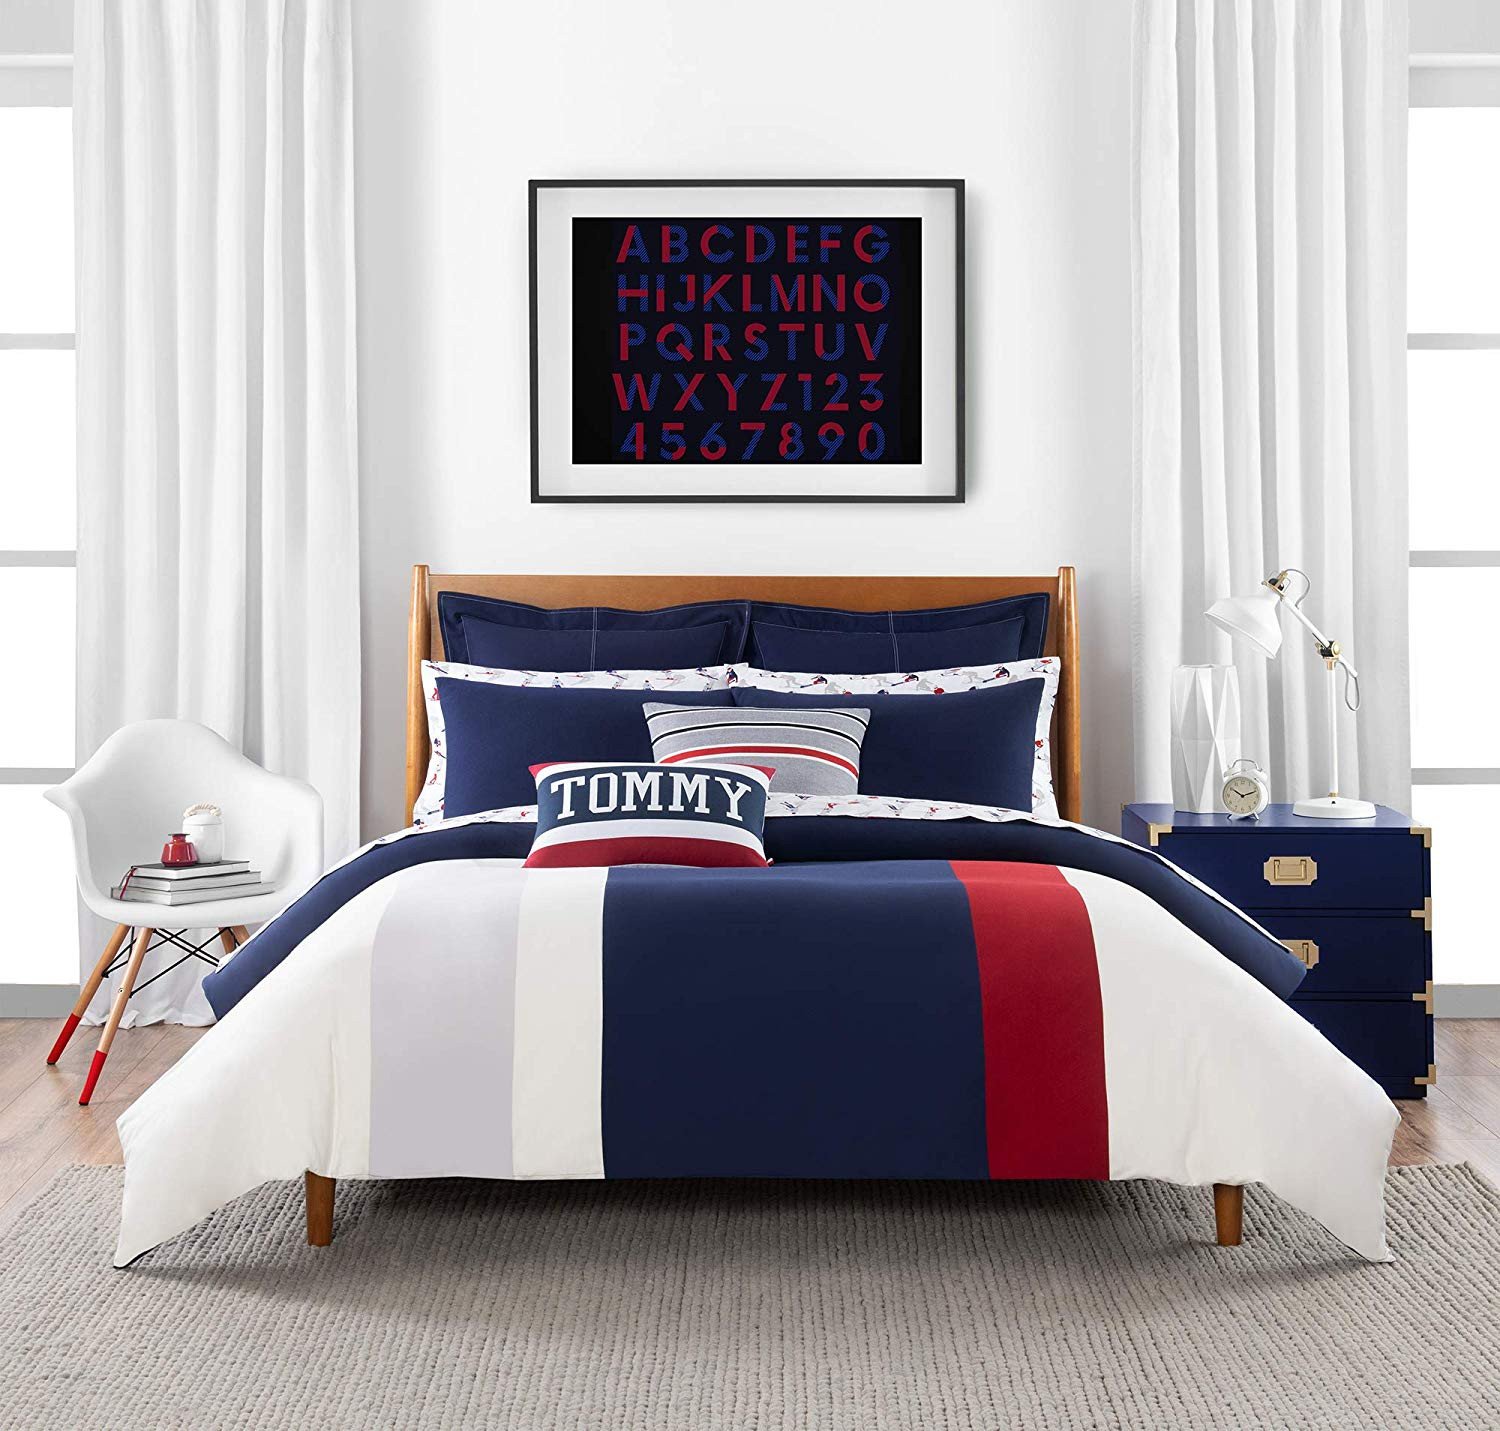 Complete Bedroom Furniture Set Fresh Amazon tommy Hilfiger Clash Of 85 Stripe Bedding